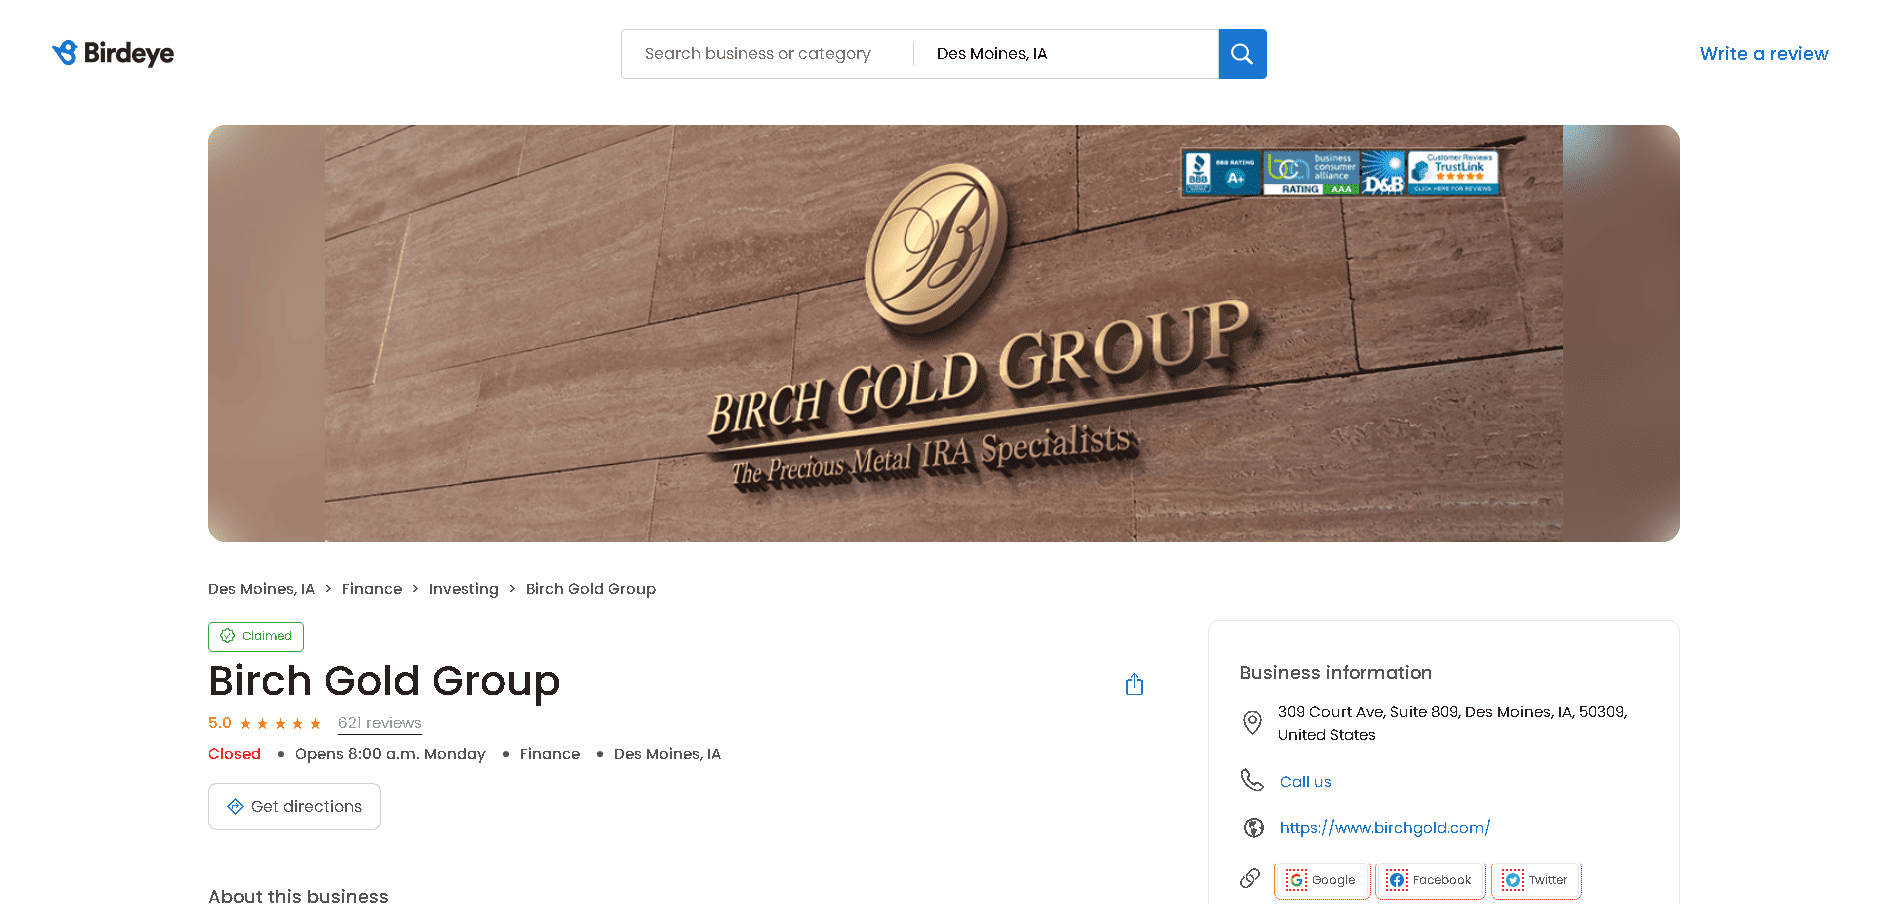 Birch Gold Group Birdeye profile and customer reviews